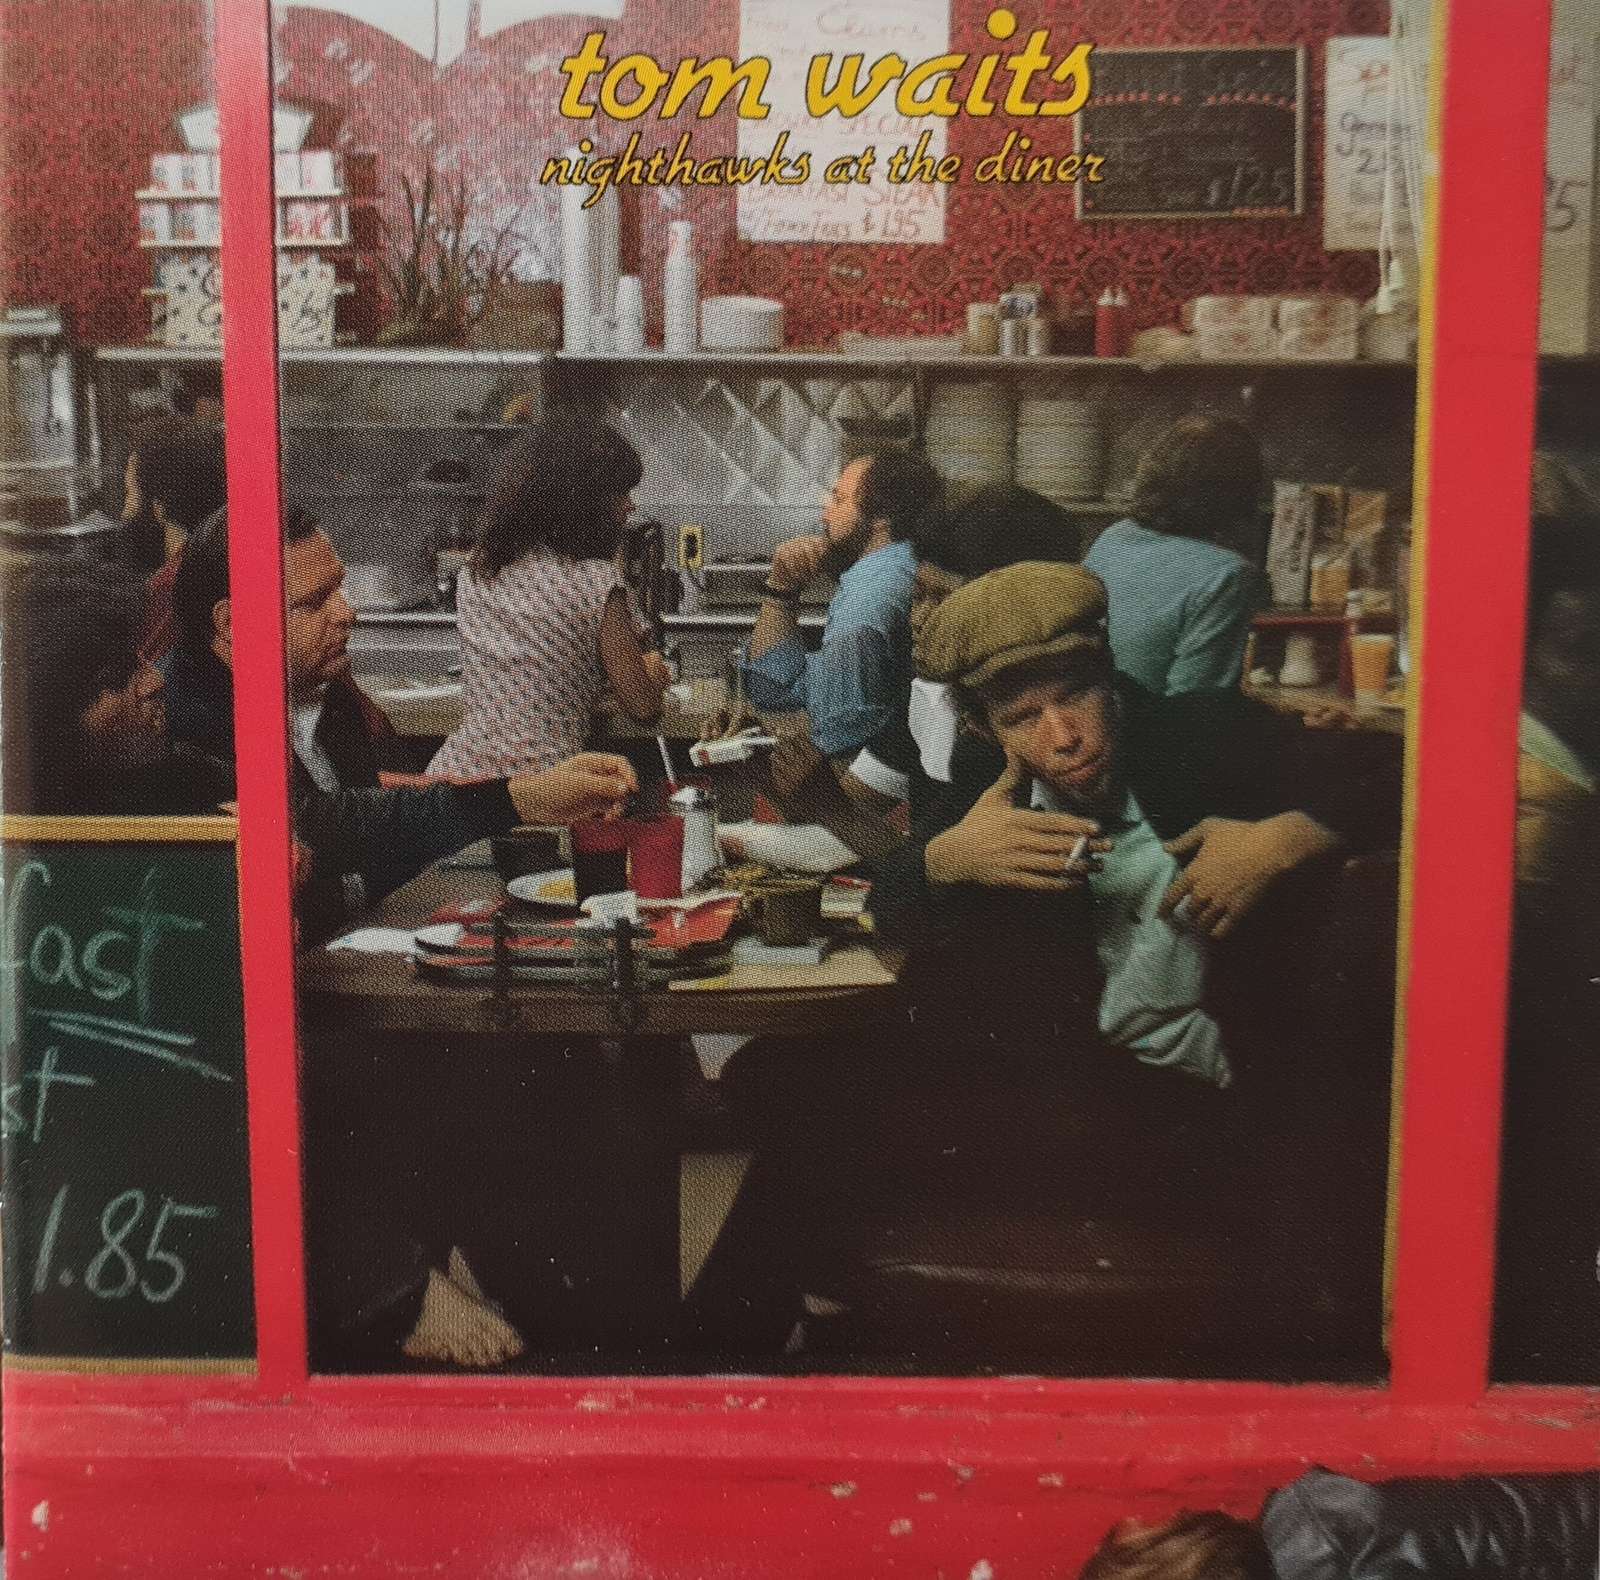 Tom Waits - Nighthawks at the Diner (CD)